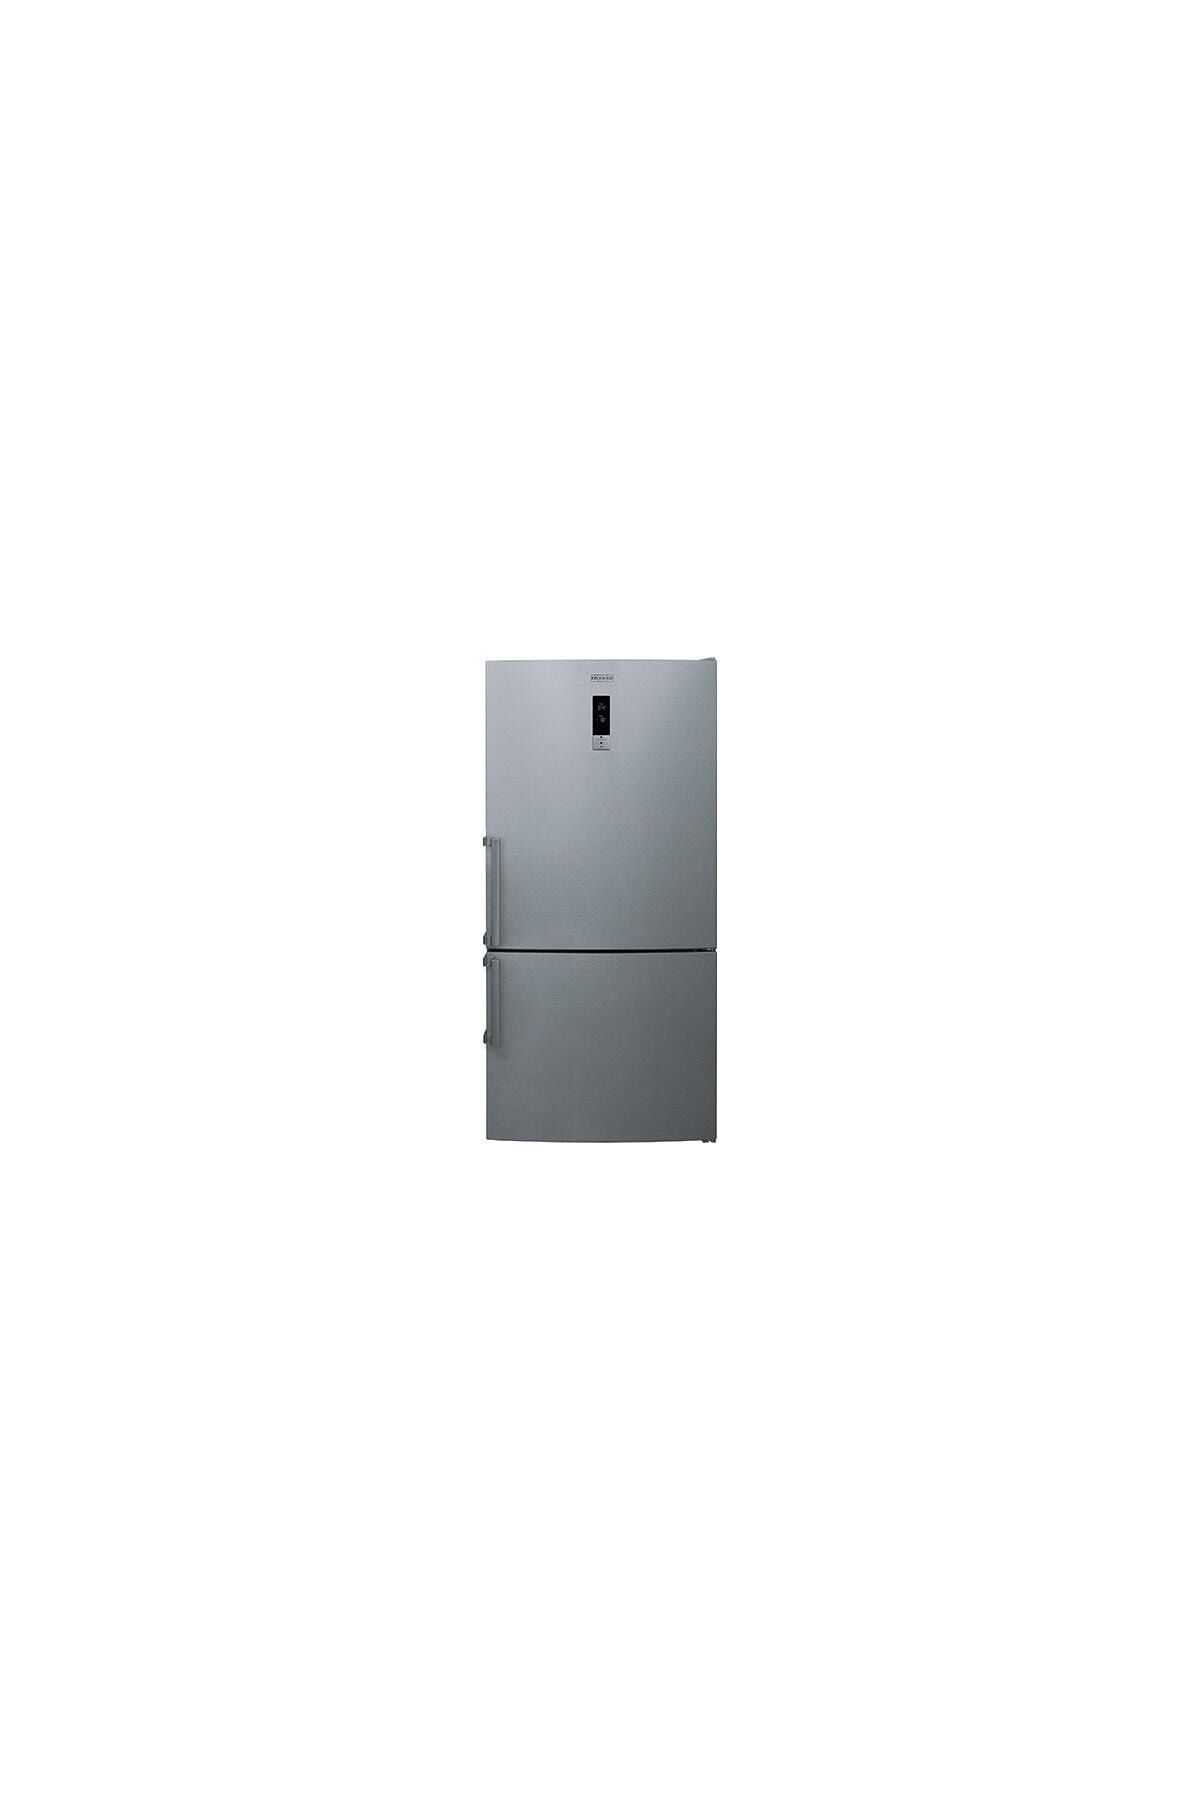 Franke Solo Ffcb 620 Nf Xs E Inox 2 Kapılı Buzdolabı